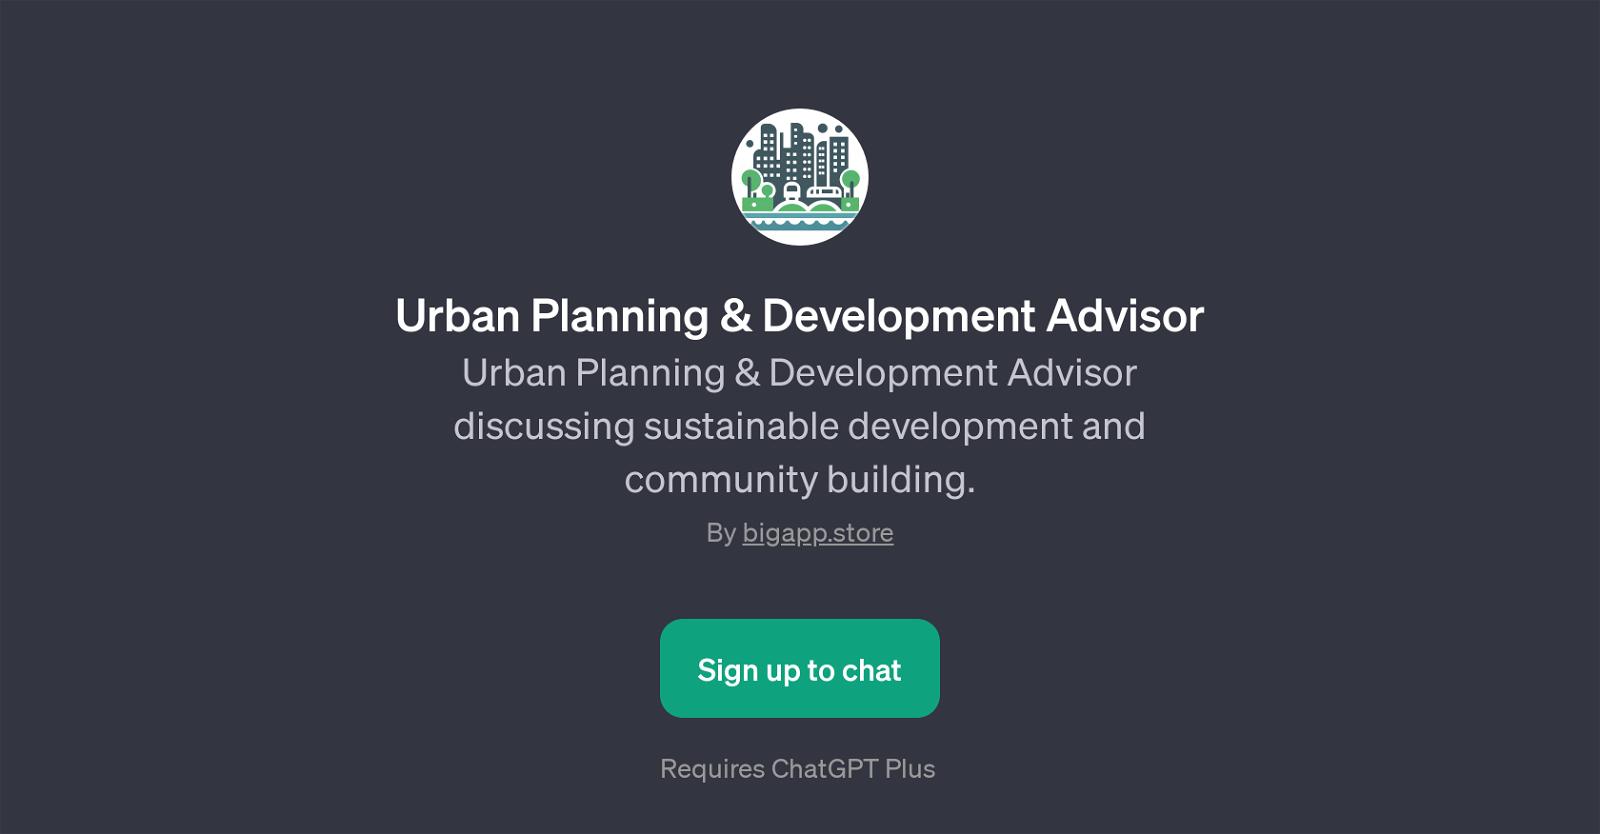 Urban Planning & Development Advisor website